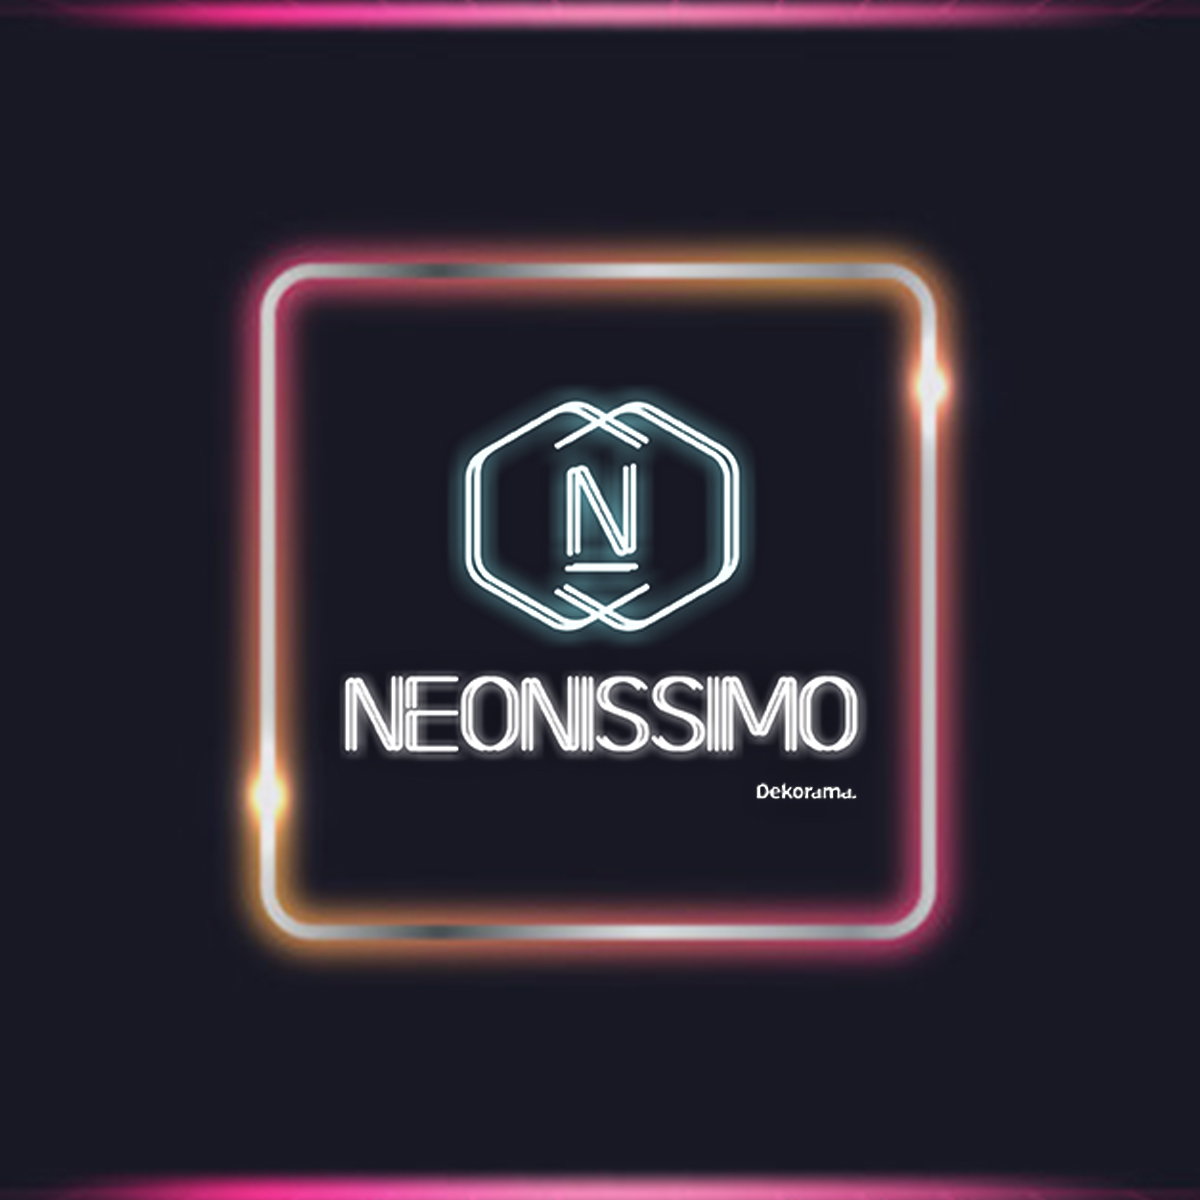 neonissimo led neon flex